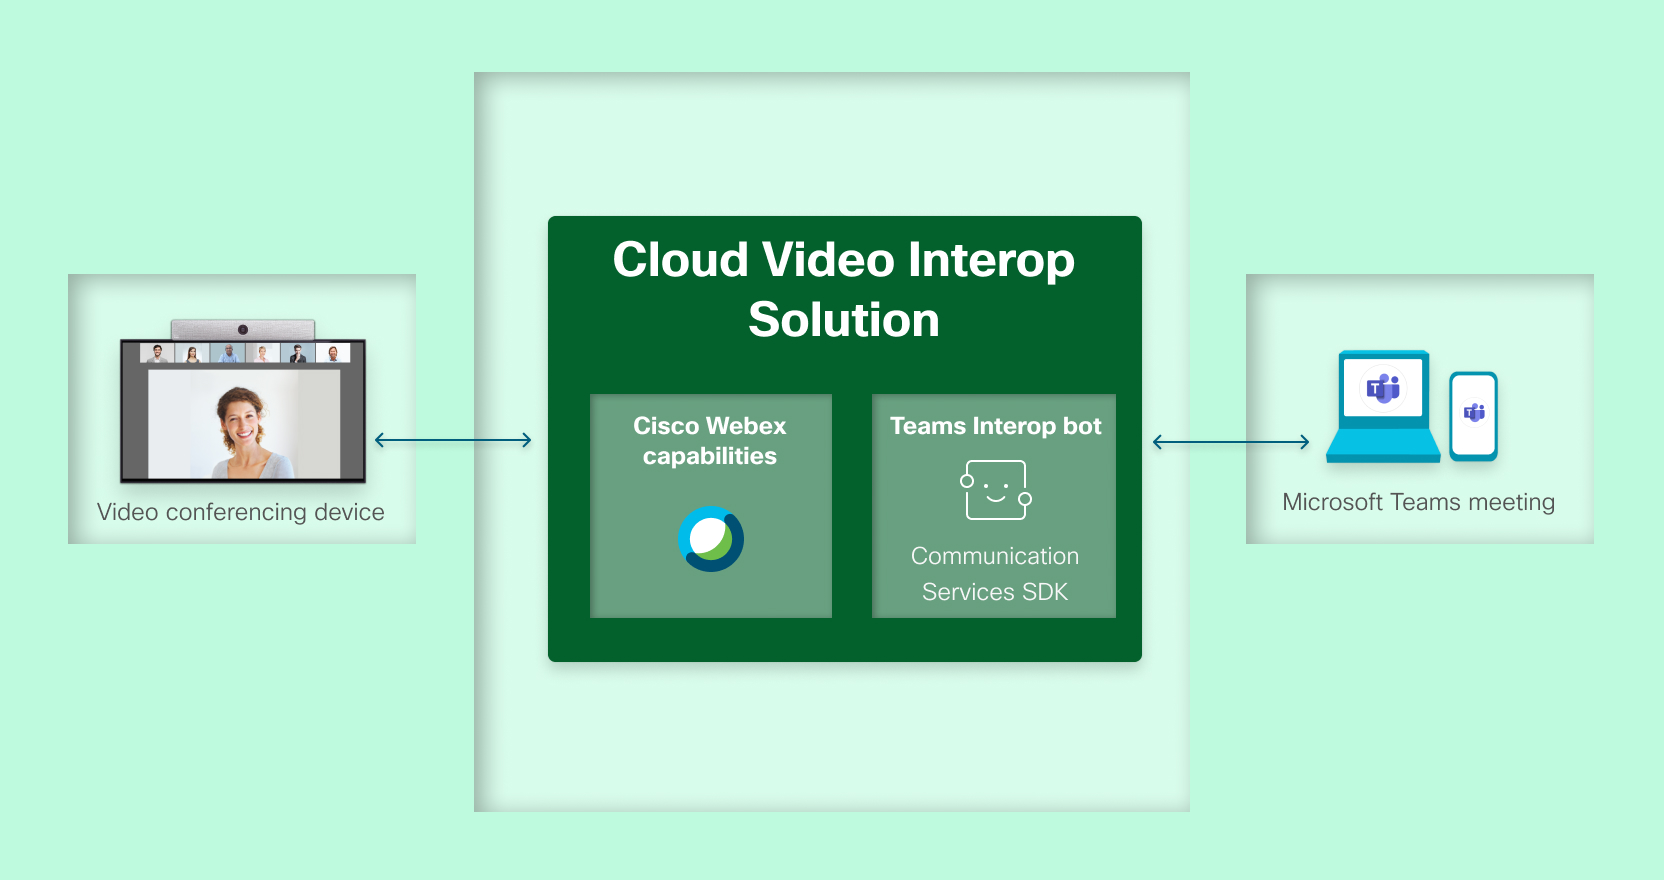 基于 https://docs.microsoft.com/en-us/microsoftteams/cloud-video-interop 的 CVI 架构图像